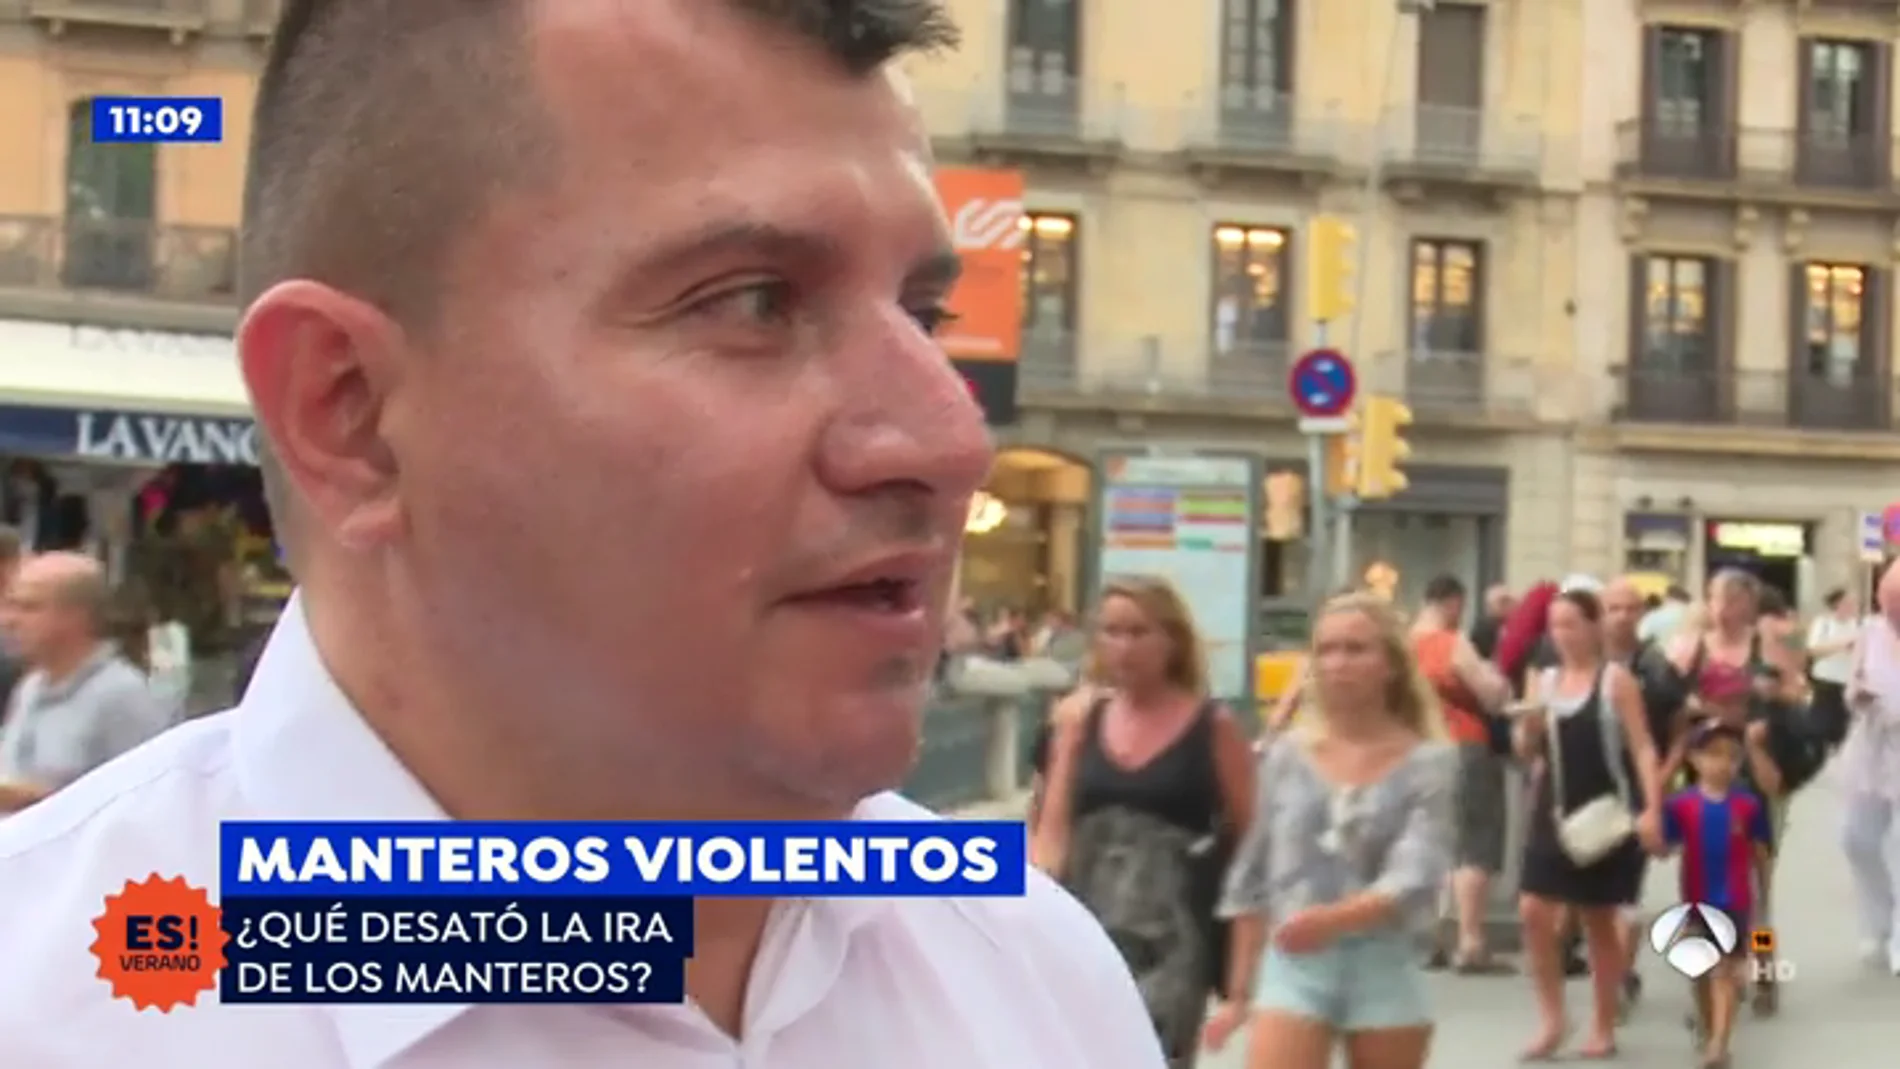 Testigo de la pelea en Barcelona: "Me dio miedo, podían matarme a mí"